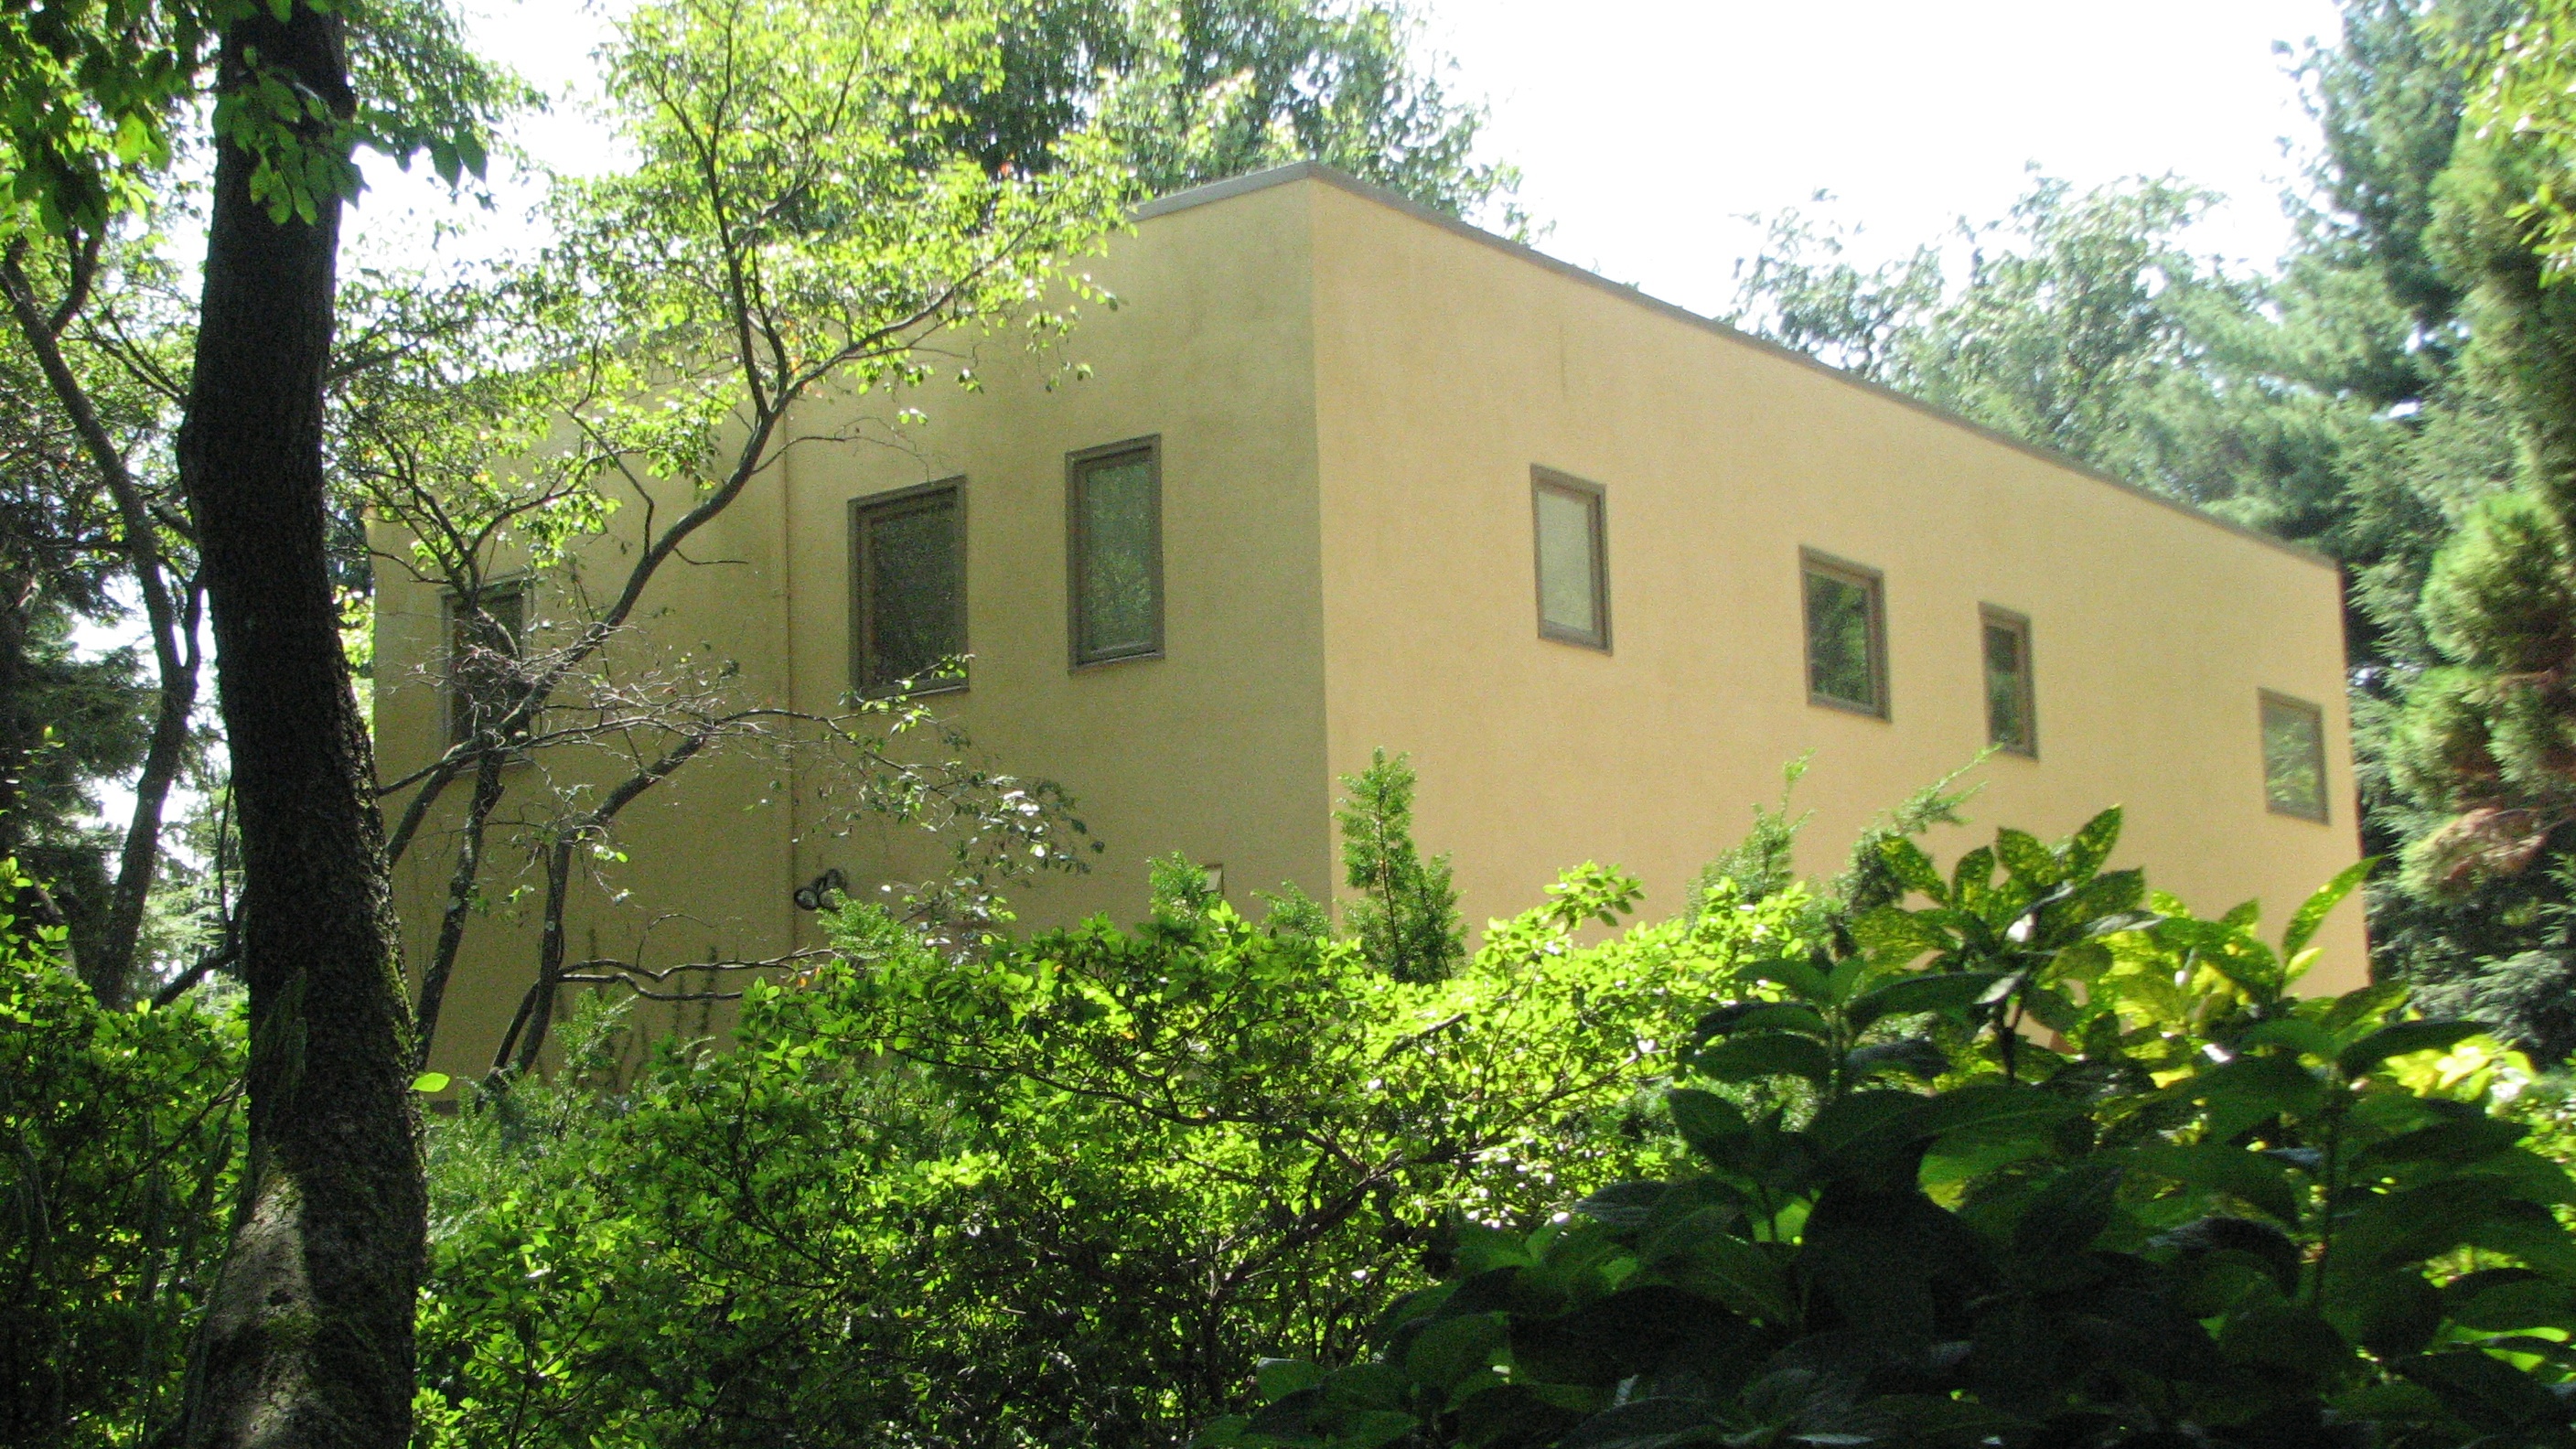 A concrete block home on Cherokee Street is reminiscent of Bauhaus design.